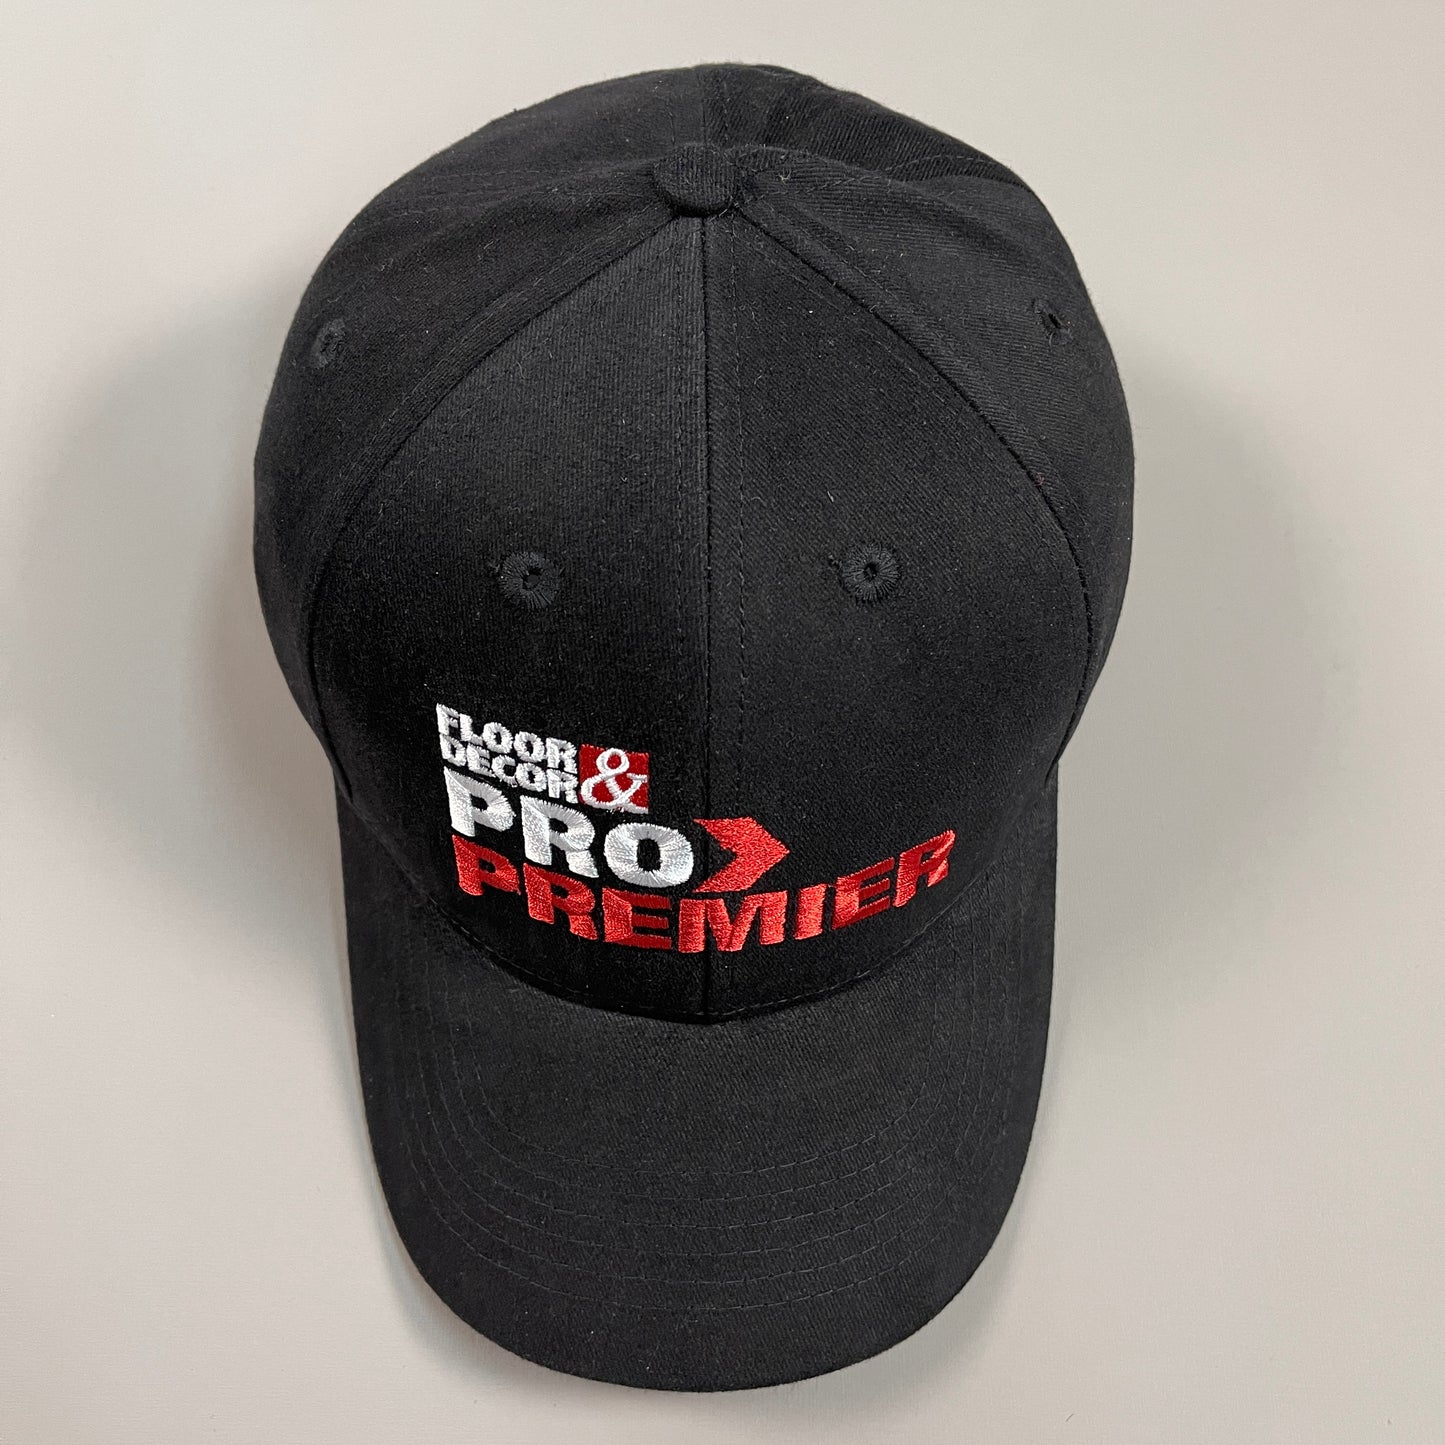 FLOOR & DECOR PRO PREMIER Baseball Cap Embroidered adjustable Hat Sz OS Black New